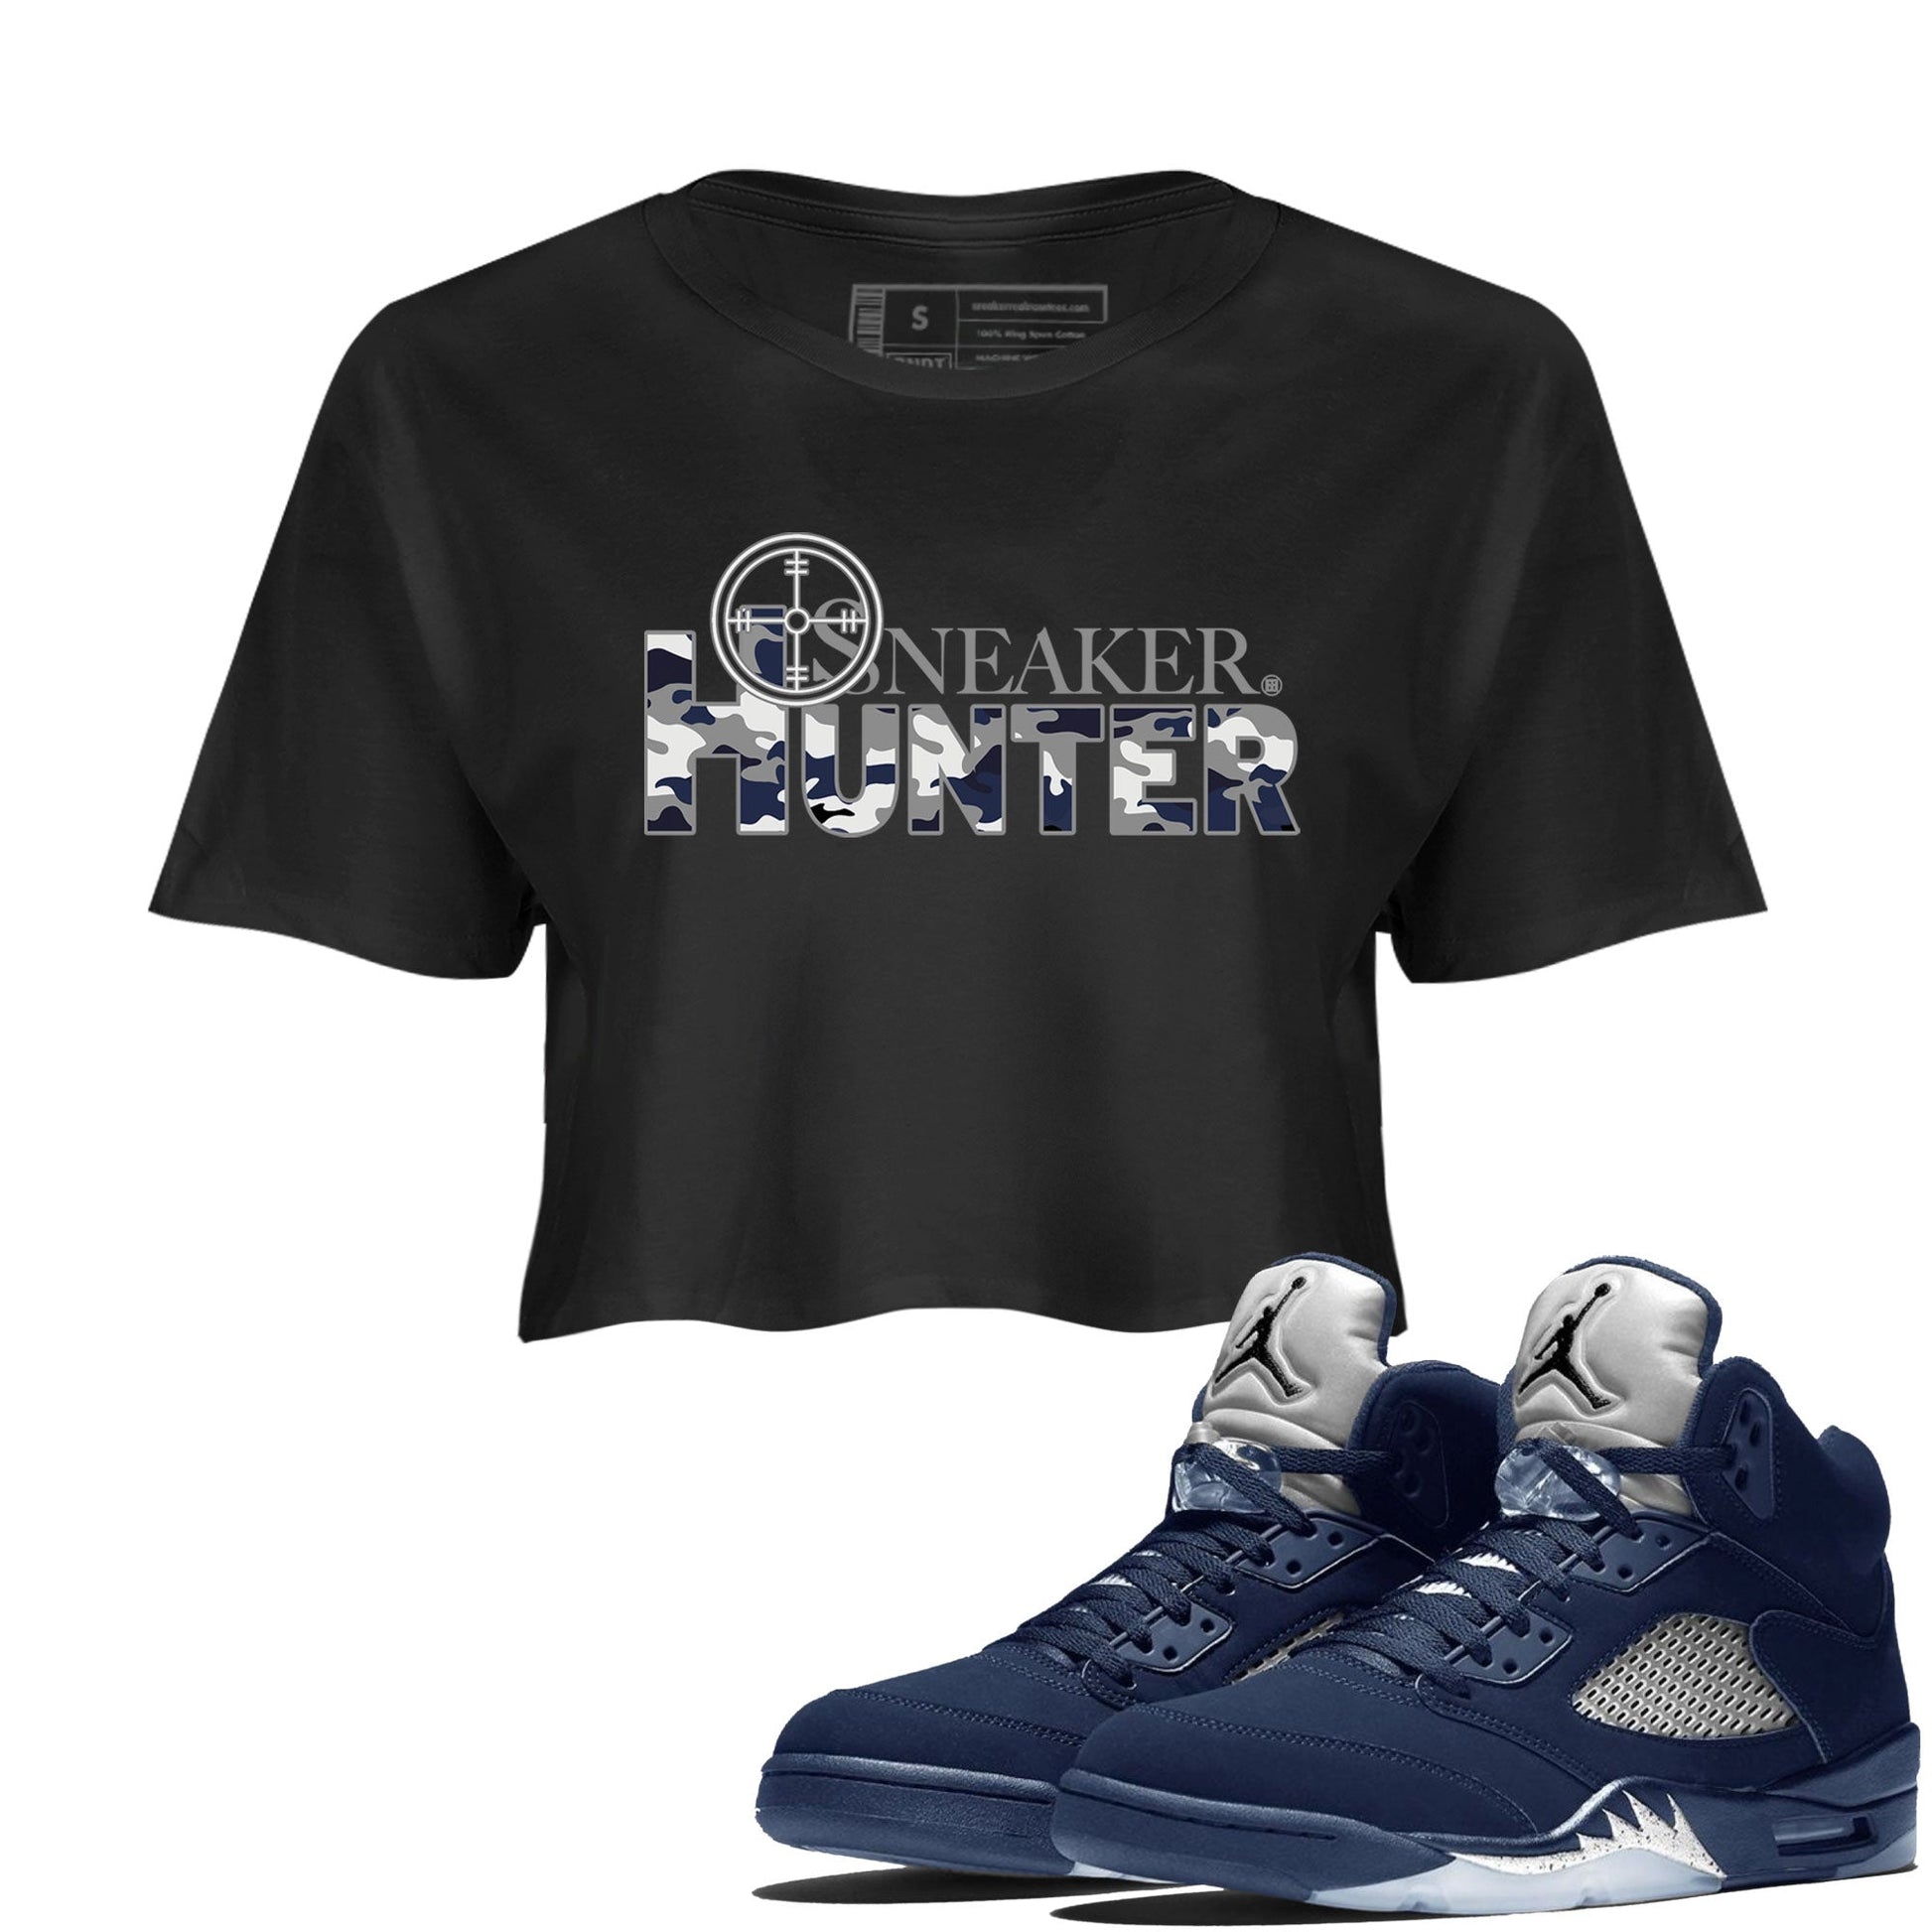 Air Jordan 5 Retro Midnight Navy shirt to match jordans Sneaker Hunter sneaker tees Air Jordan 5 Midnight Navy SNRT Sneaker Release Tees Black 1 Crop T-Shirt